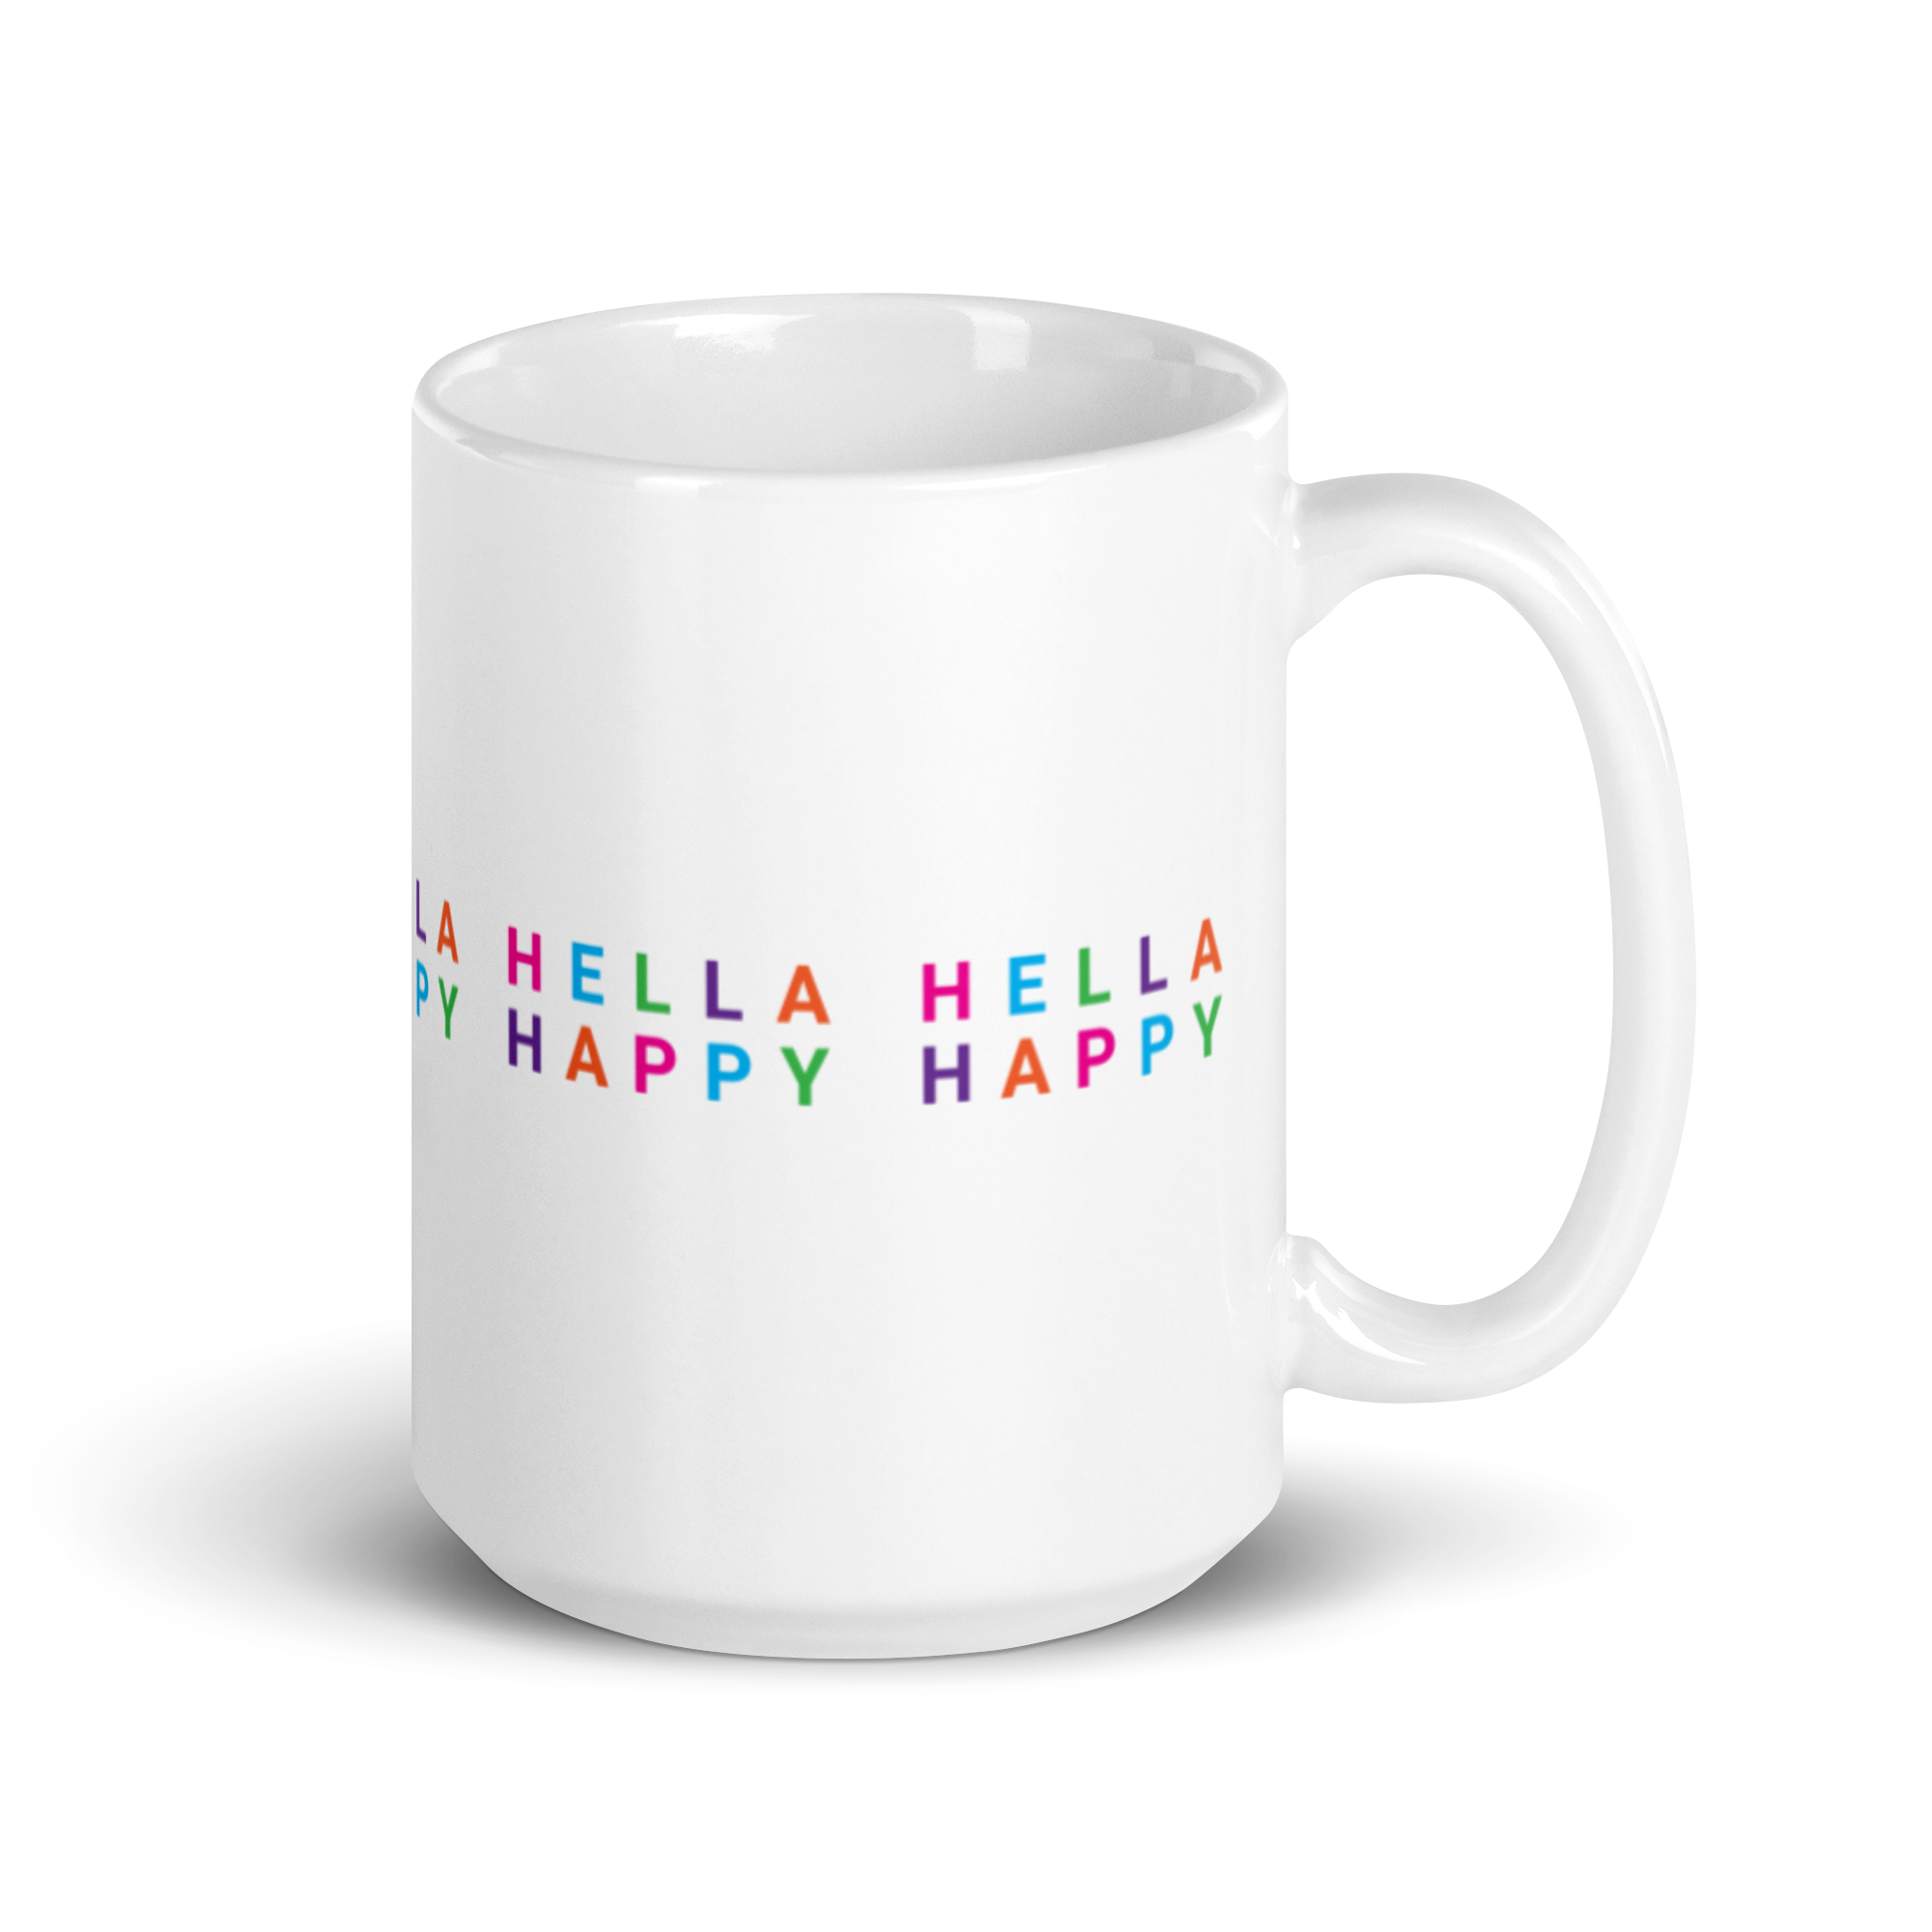 Hella Happy Rainbow Mug